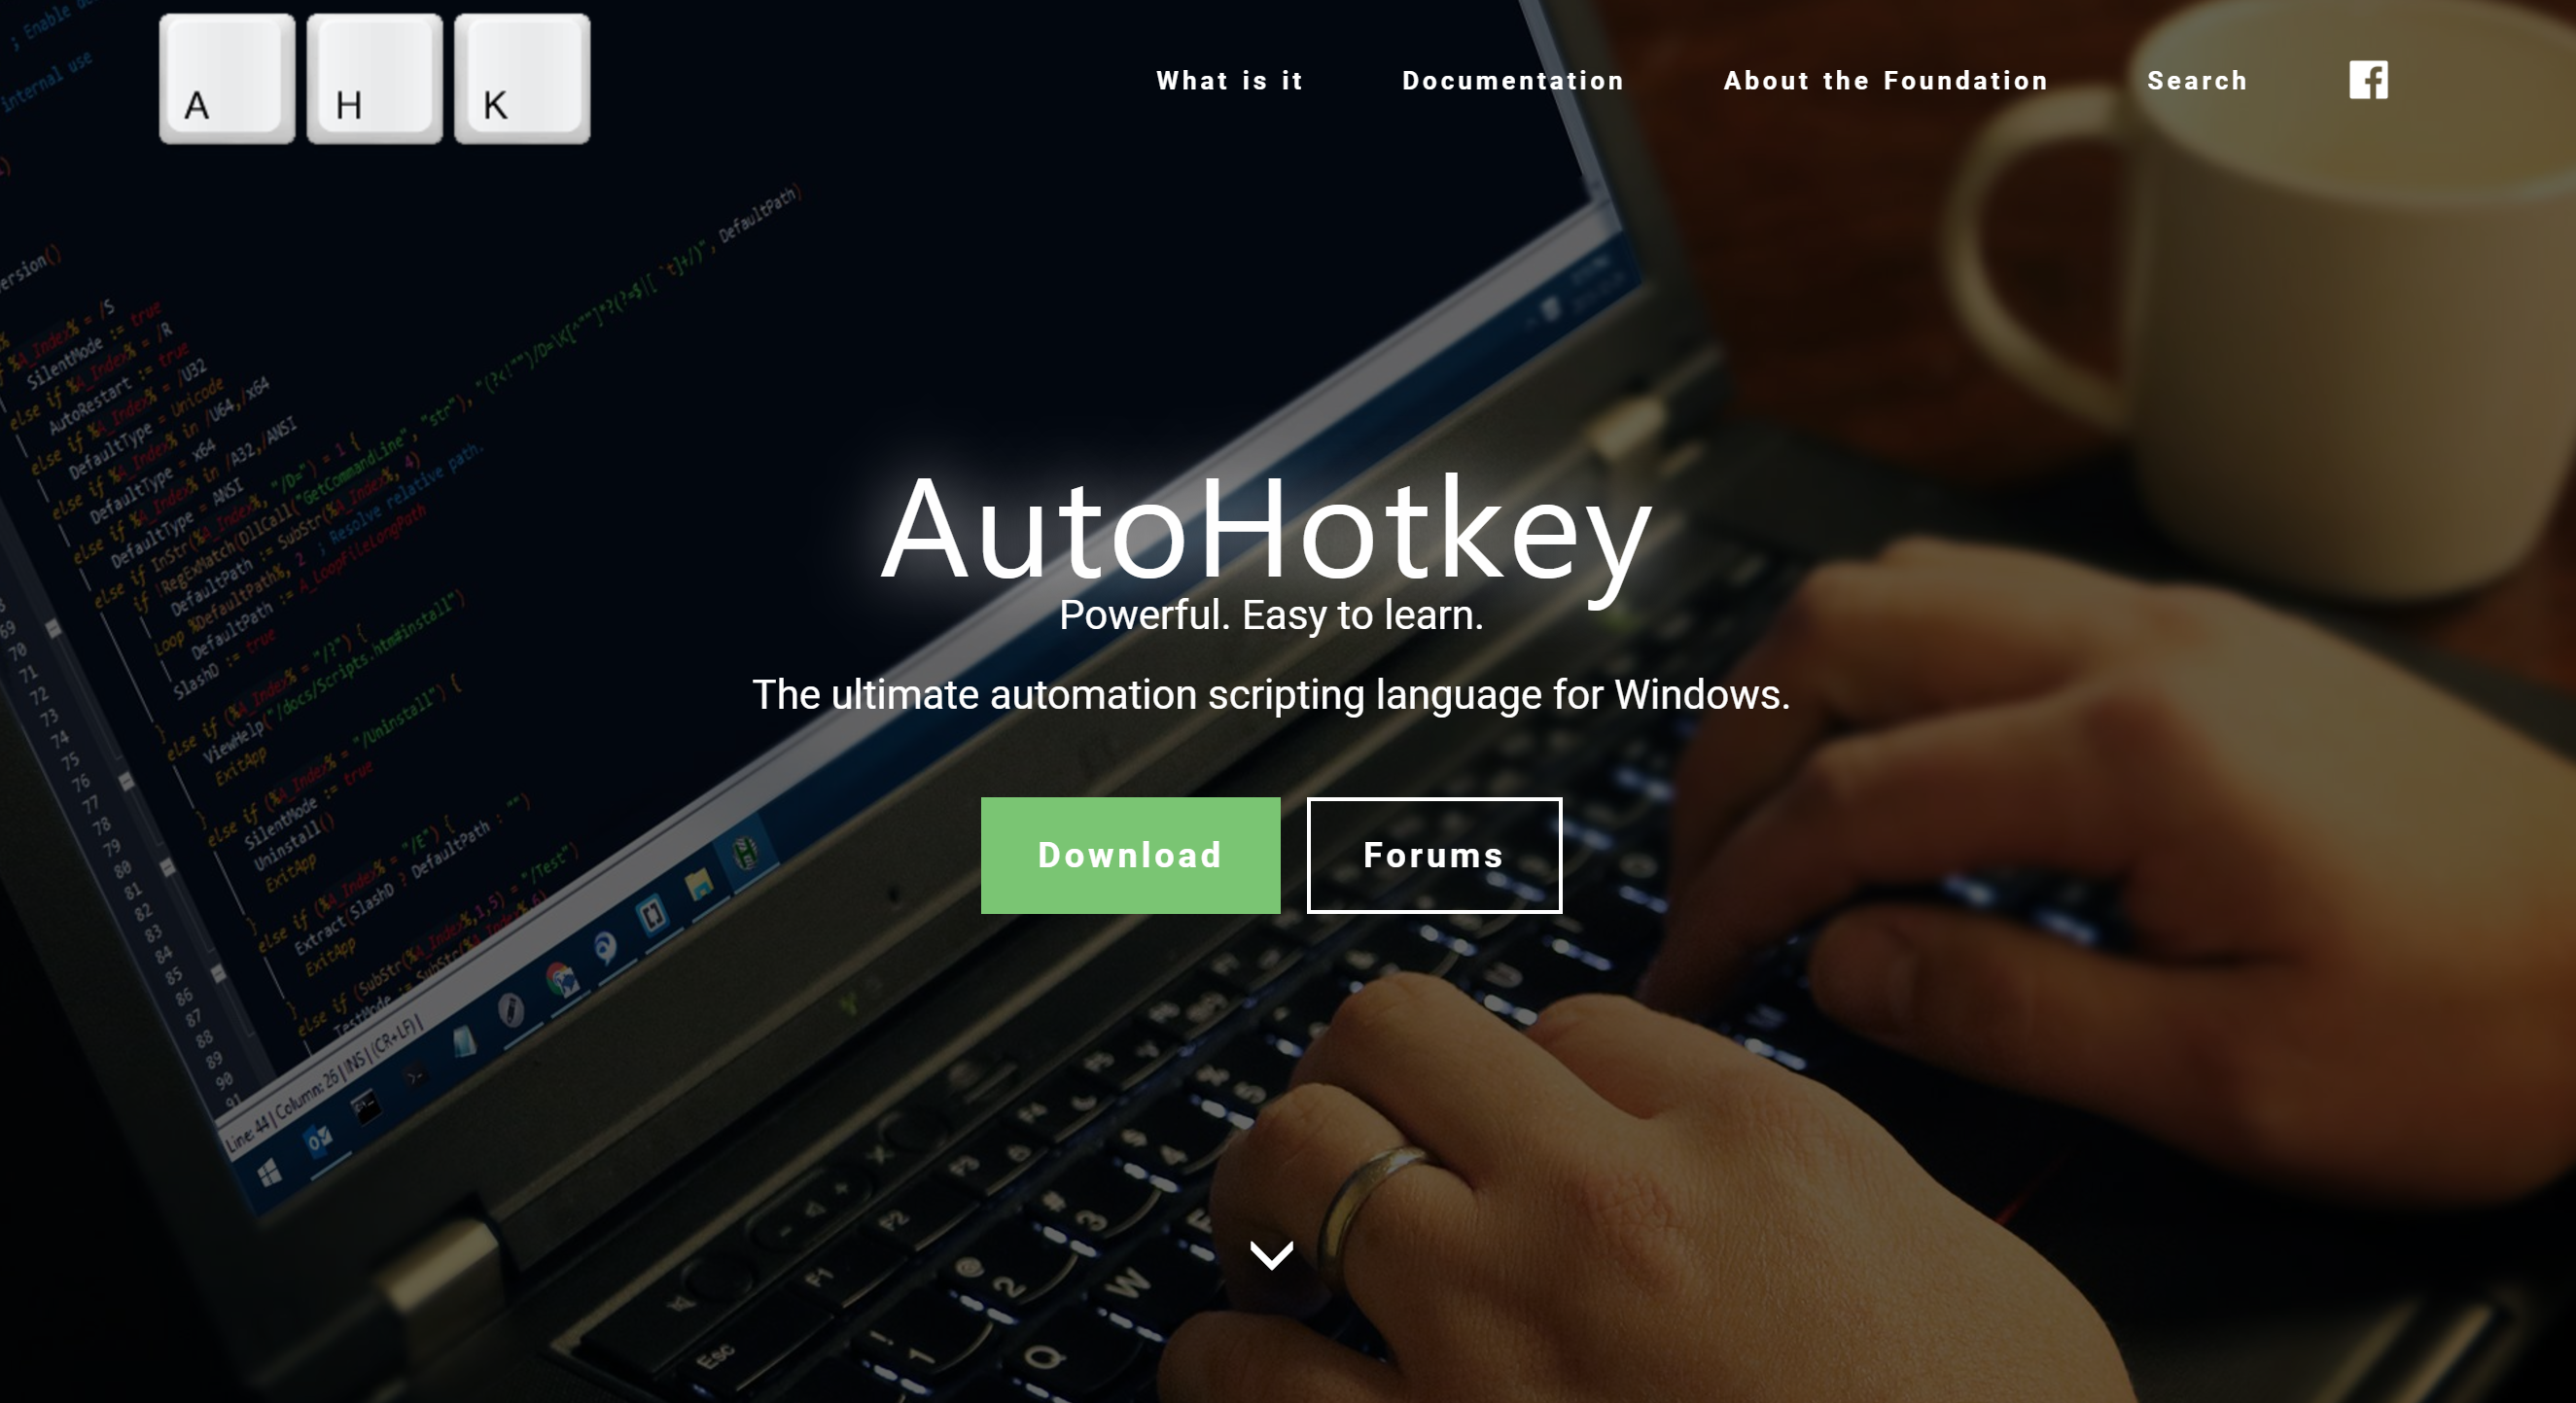 download the new AutoHotkey 2.0.3